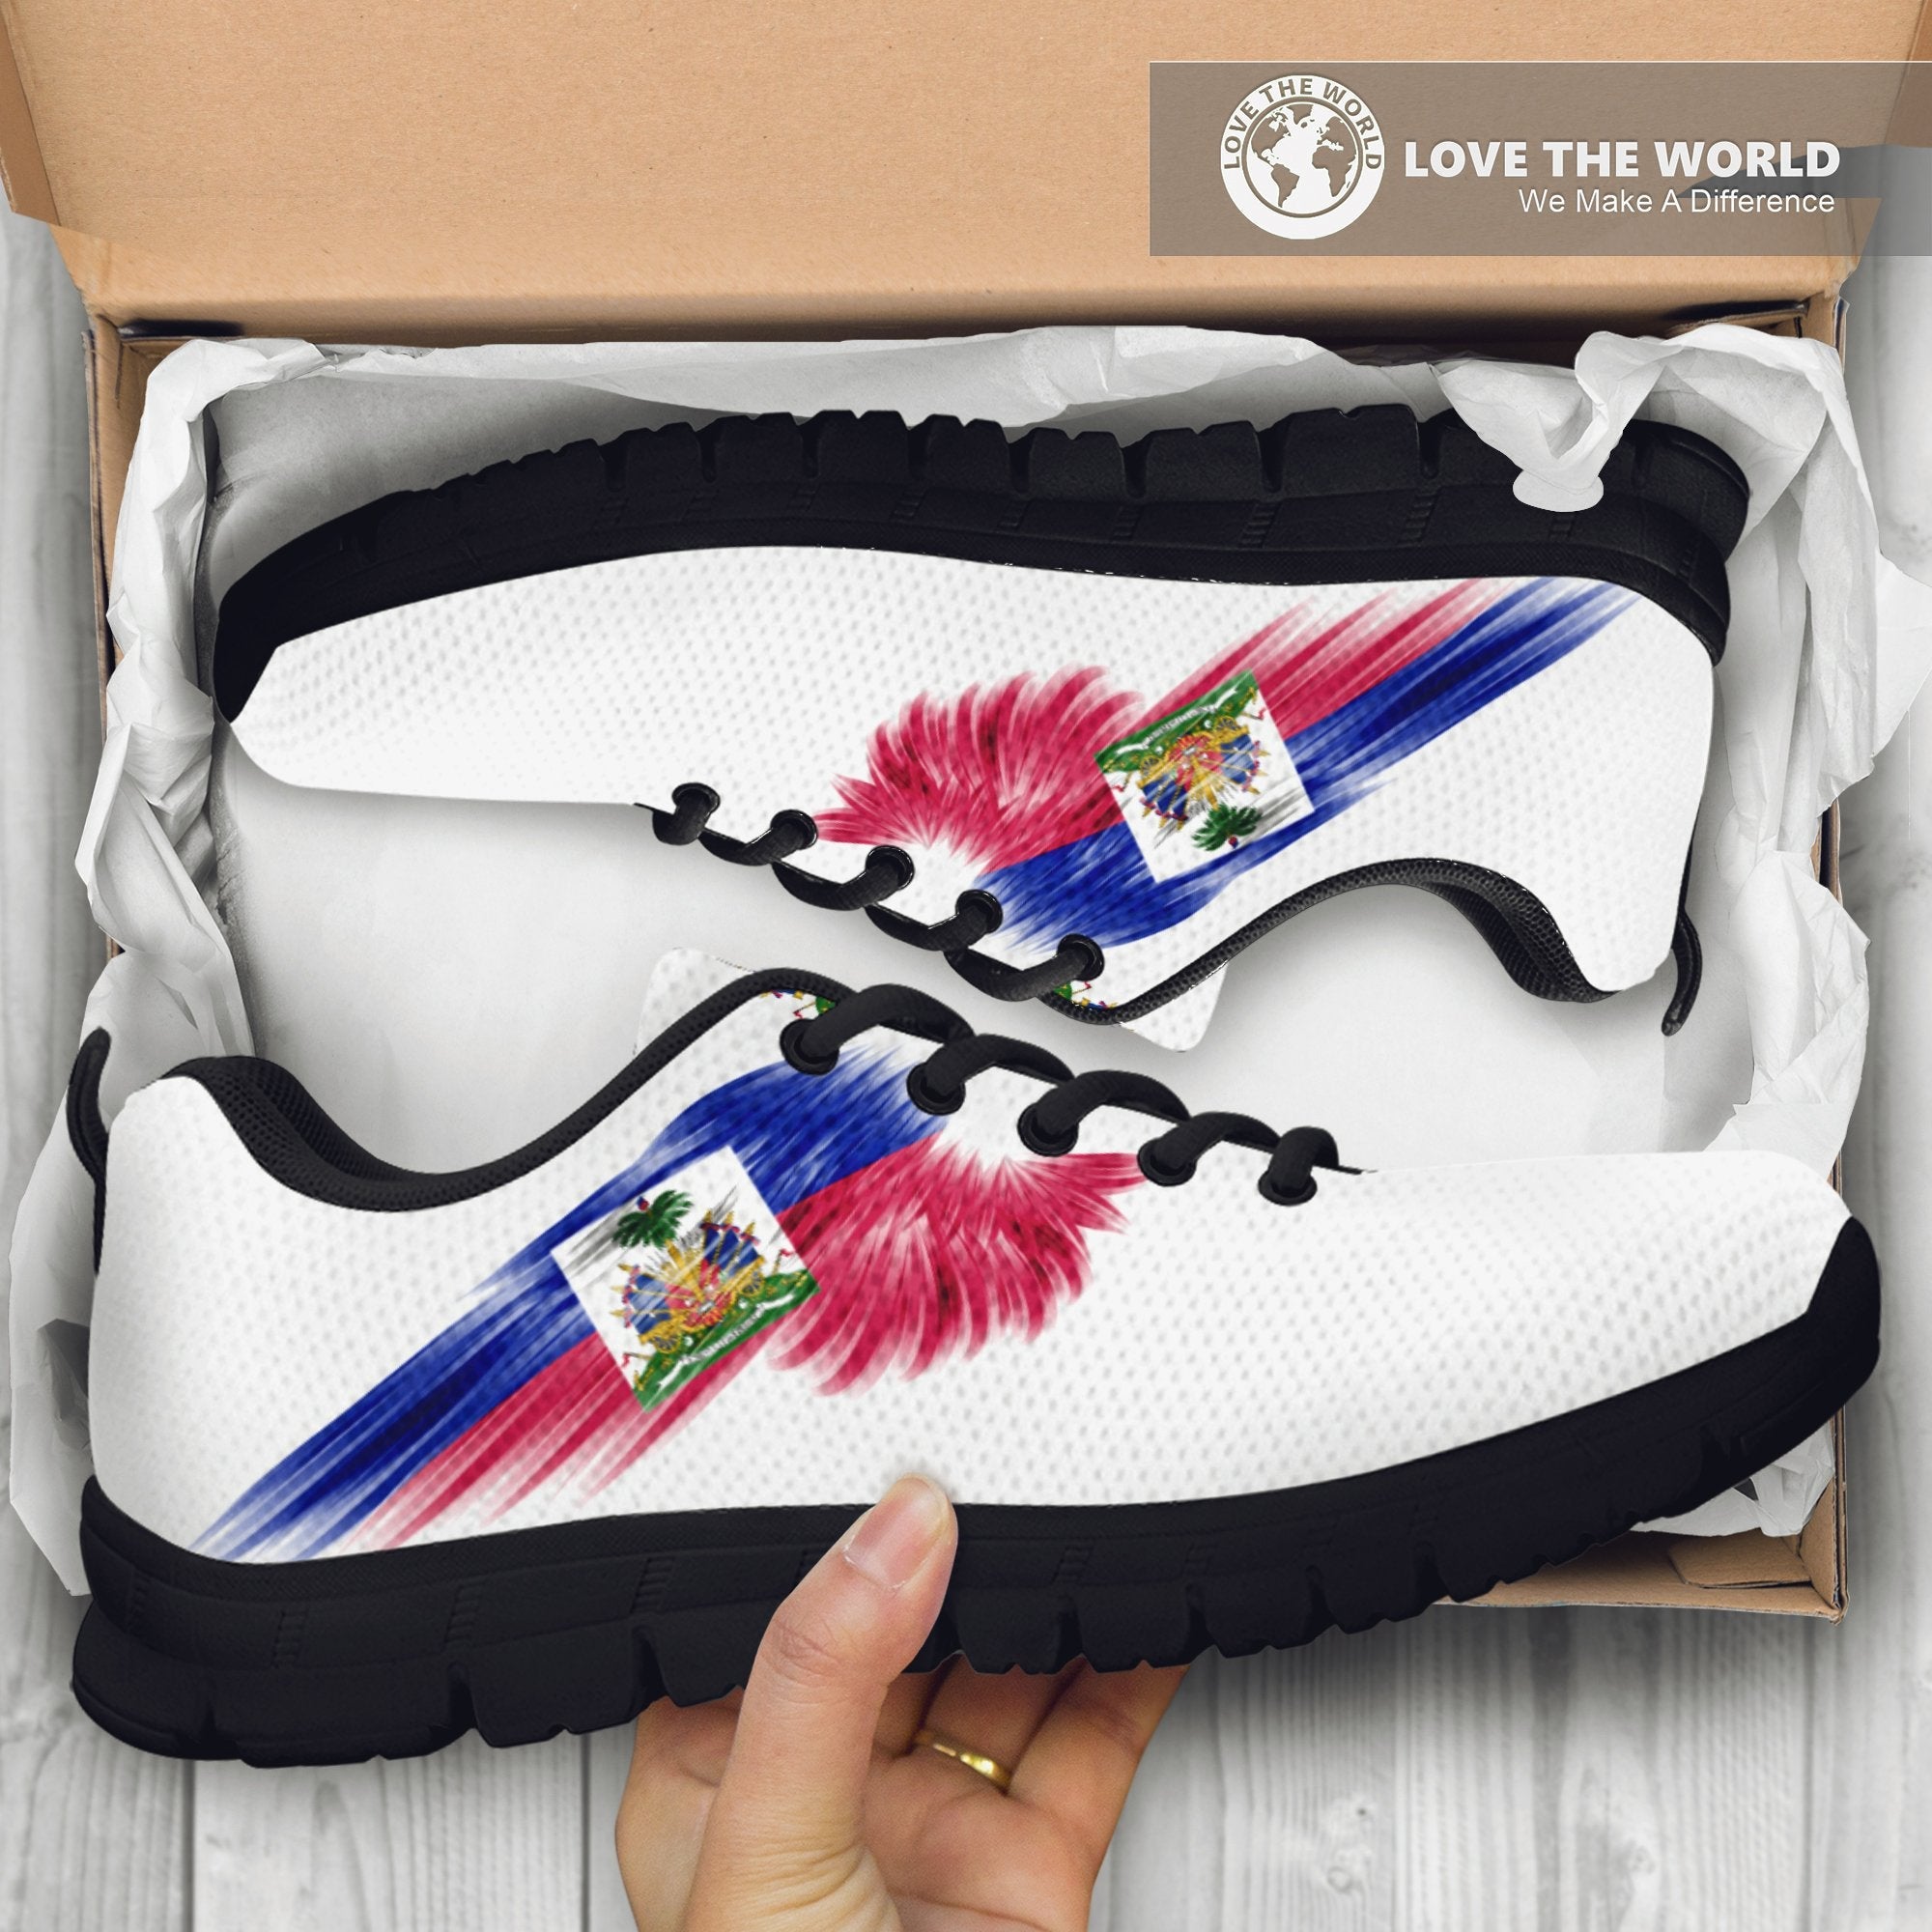 haiti-mens-womens-kids-black-and-white-sneakers